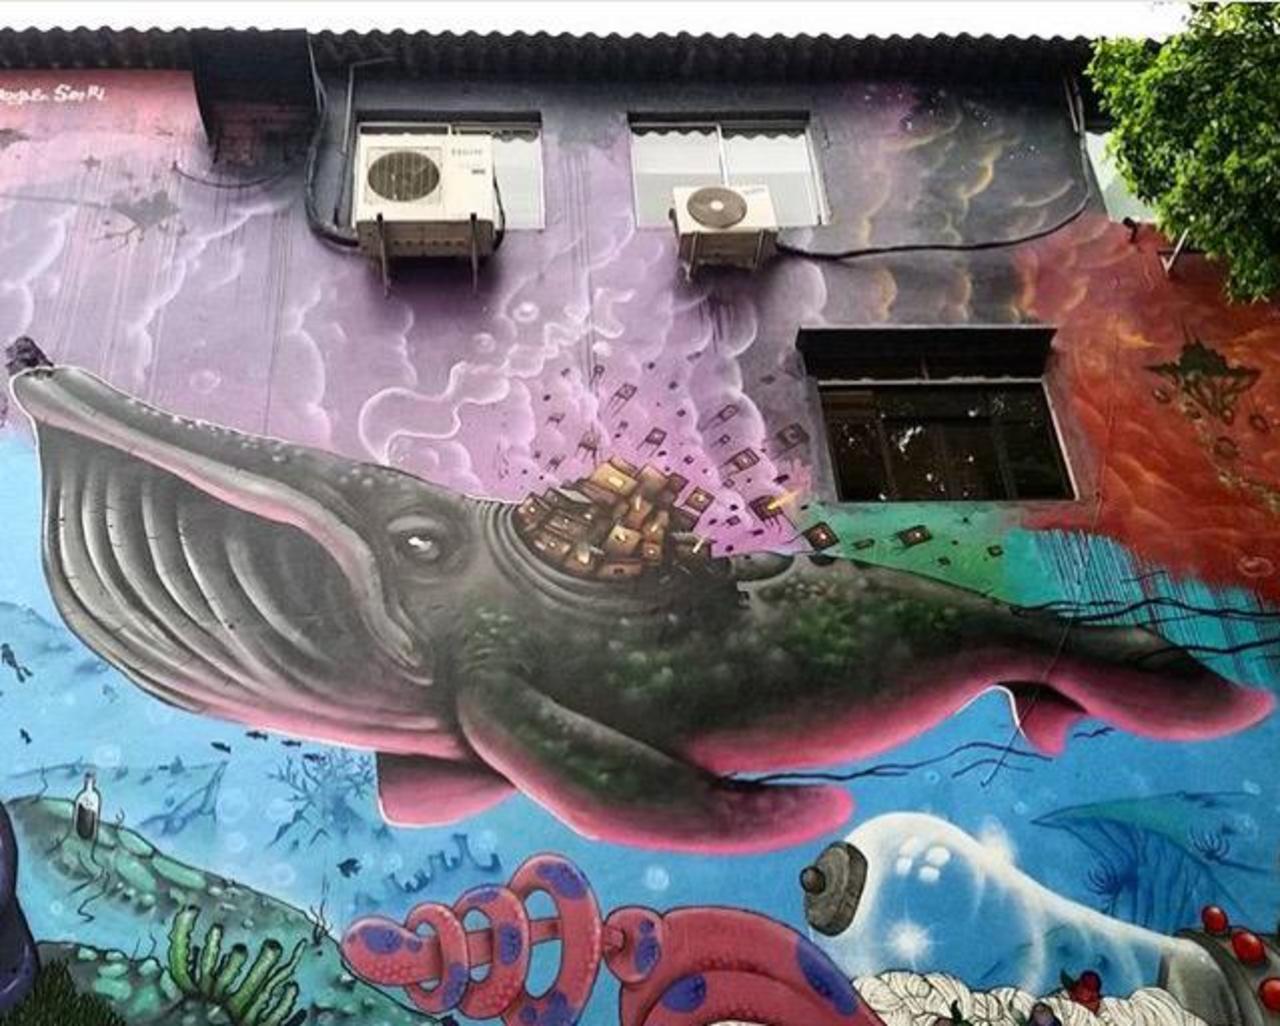 Street Art by joks_johnes Pinheiros, São Paulo 

#art #mural #graffiti #streetart http://t.co/qVRuMXJP71